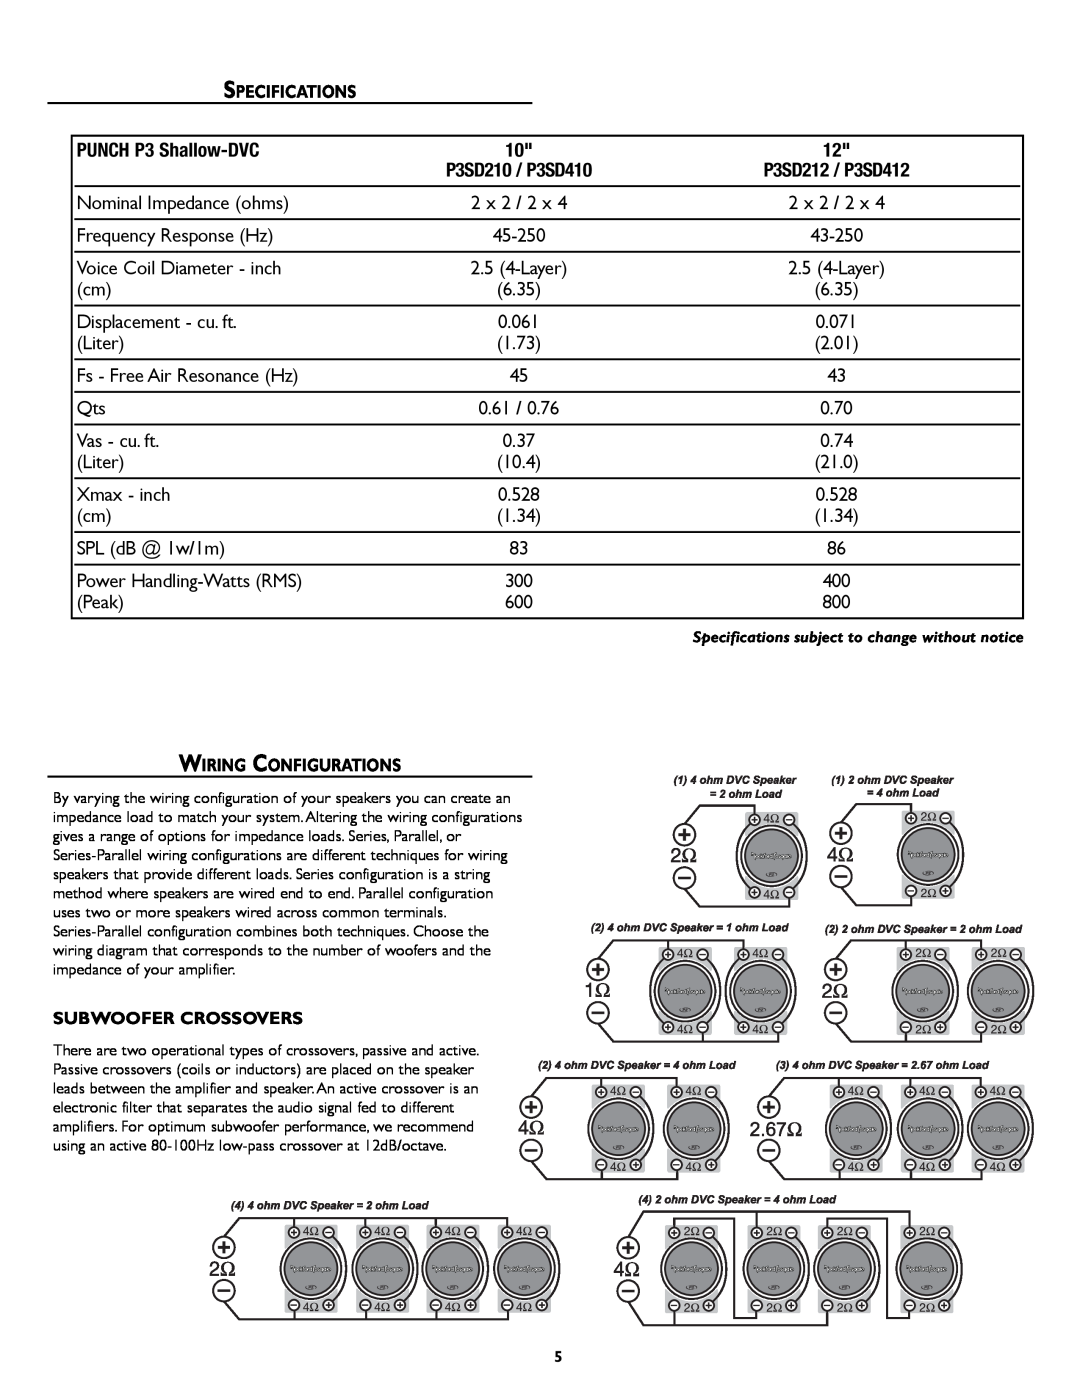 Rockford Fosgate P3S warranty PUNCH P3 Shallow-DVC, Nominal Impedance ohms 